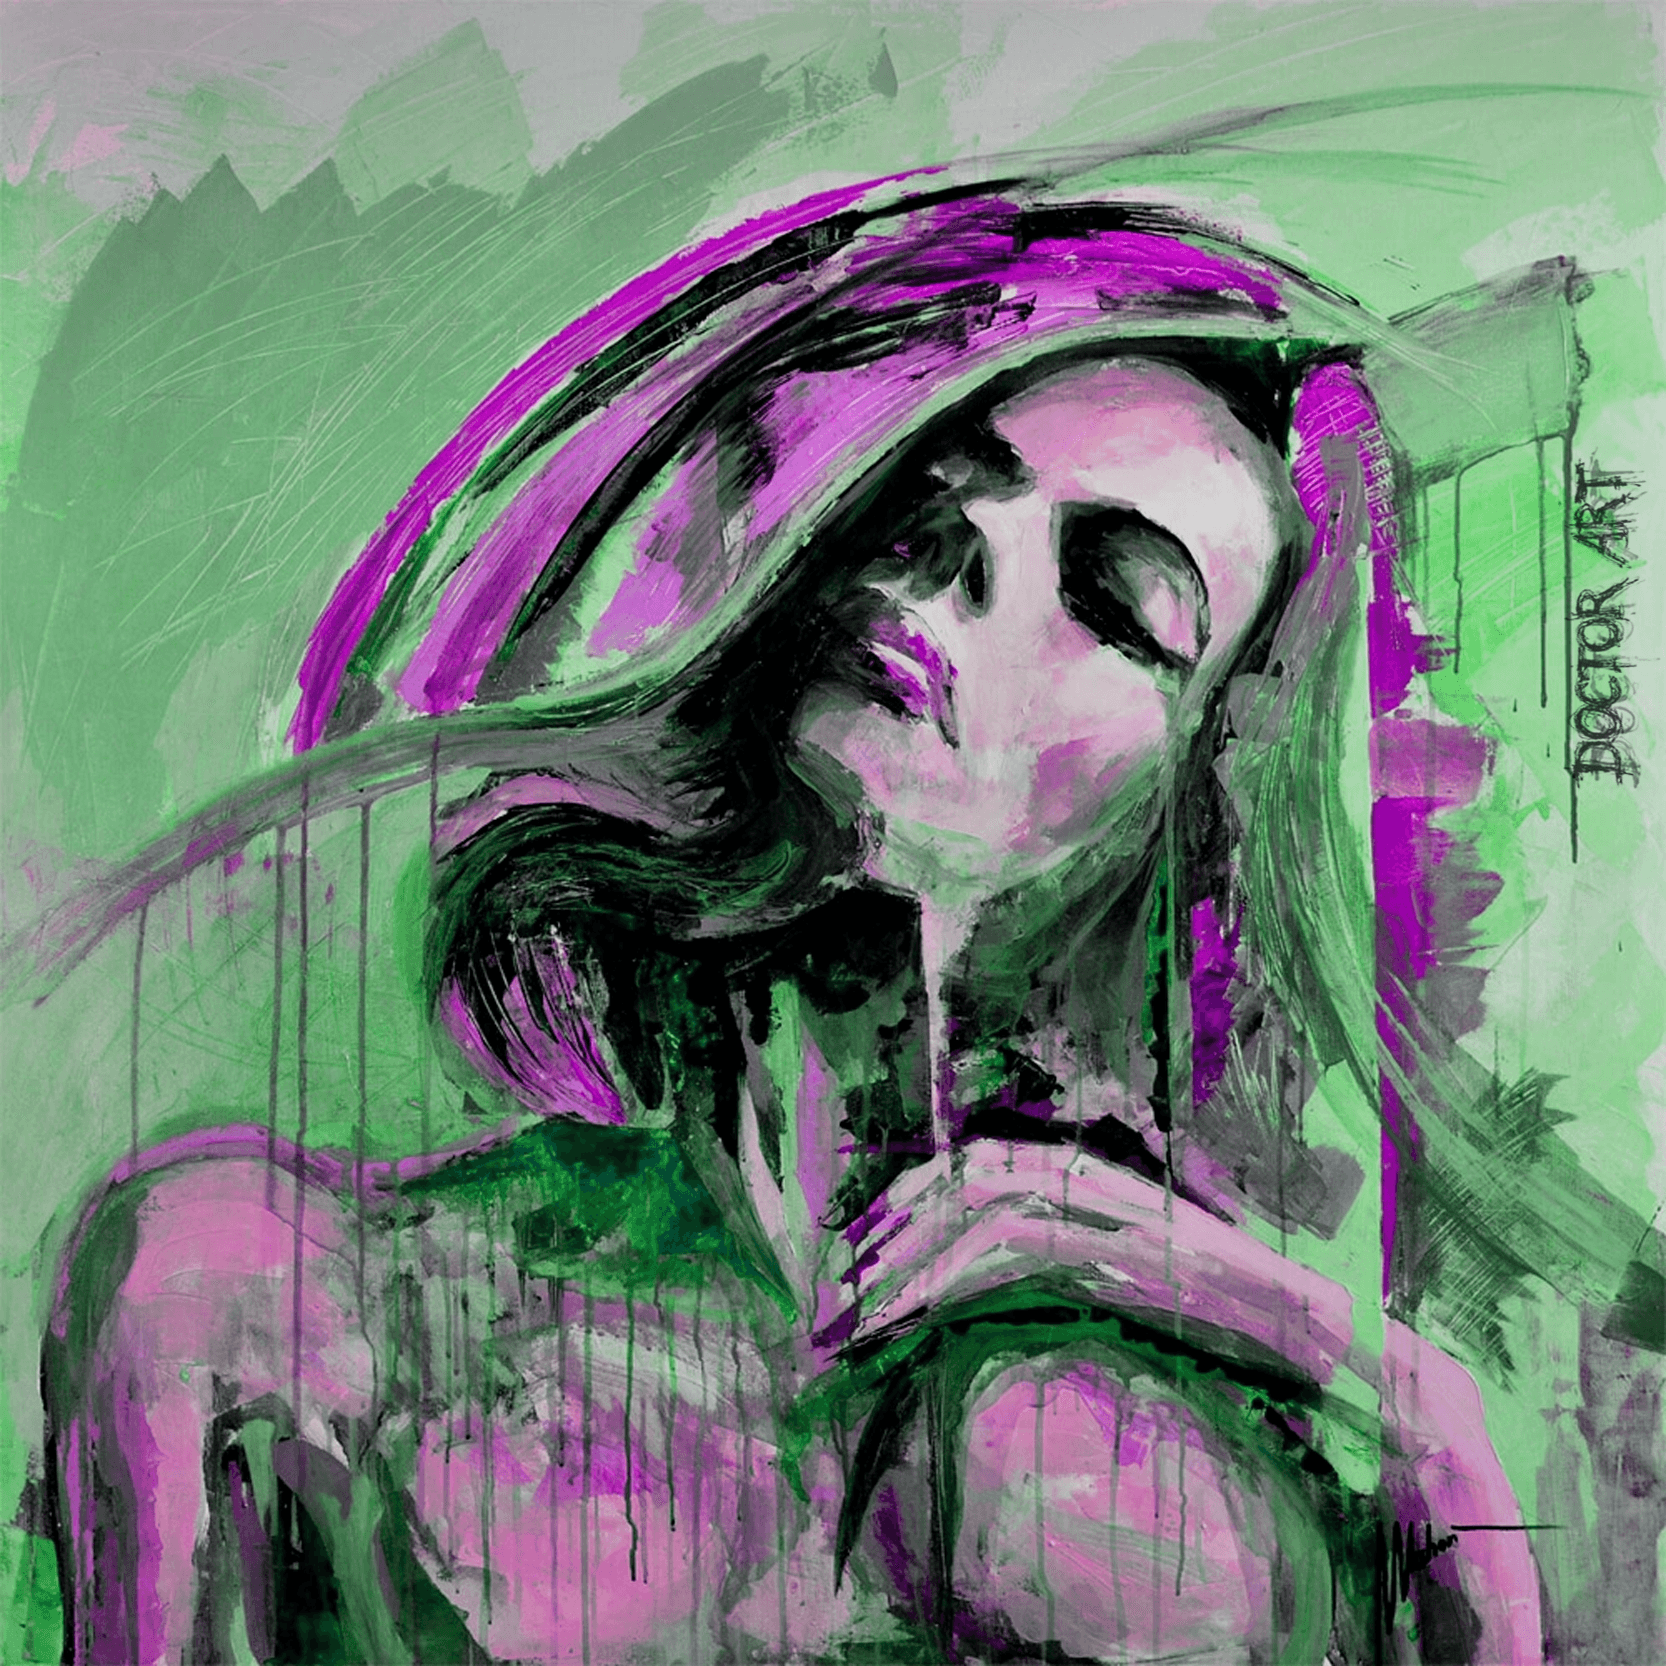 Morphine-violet